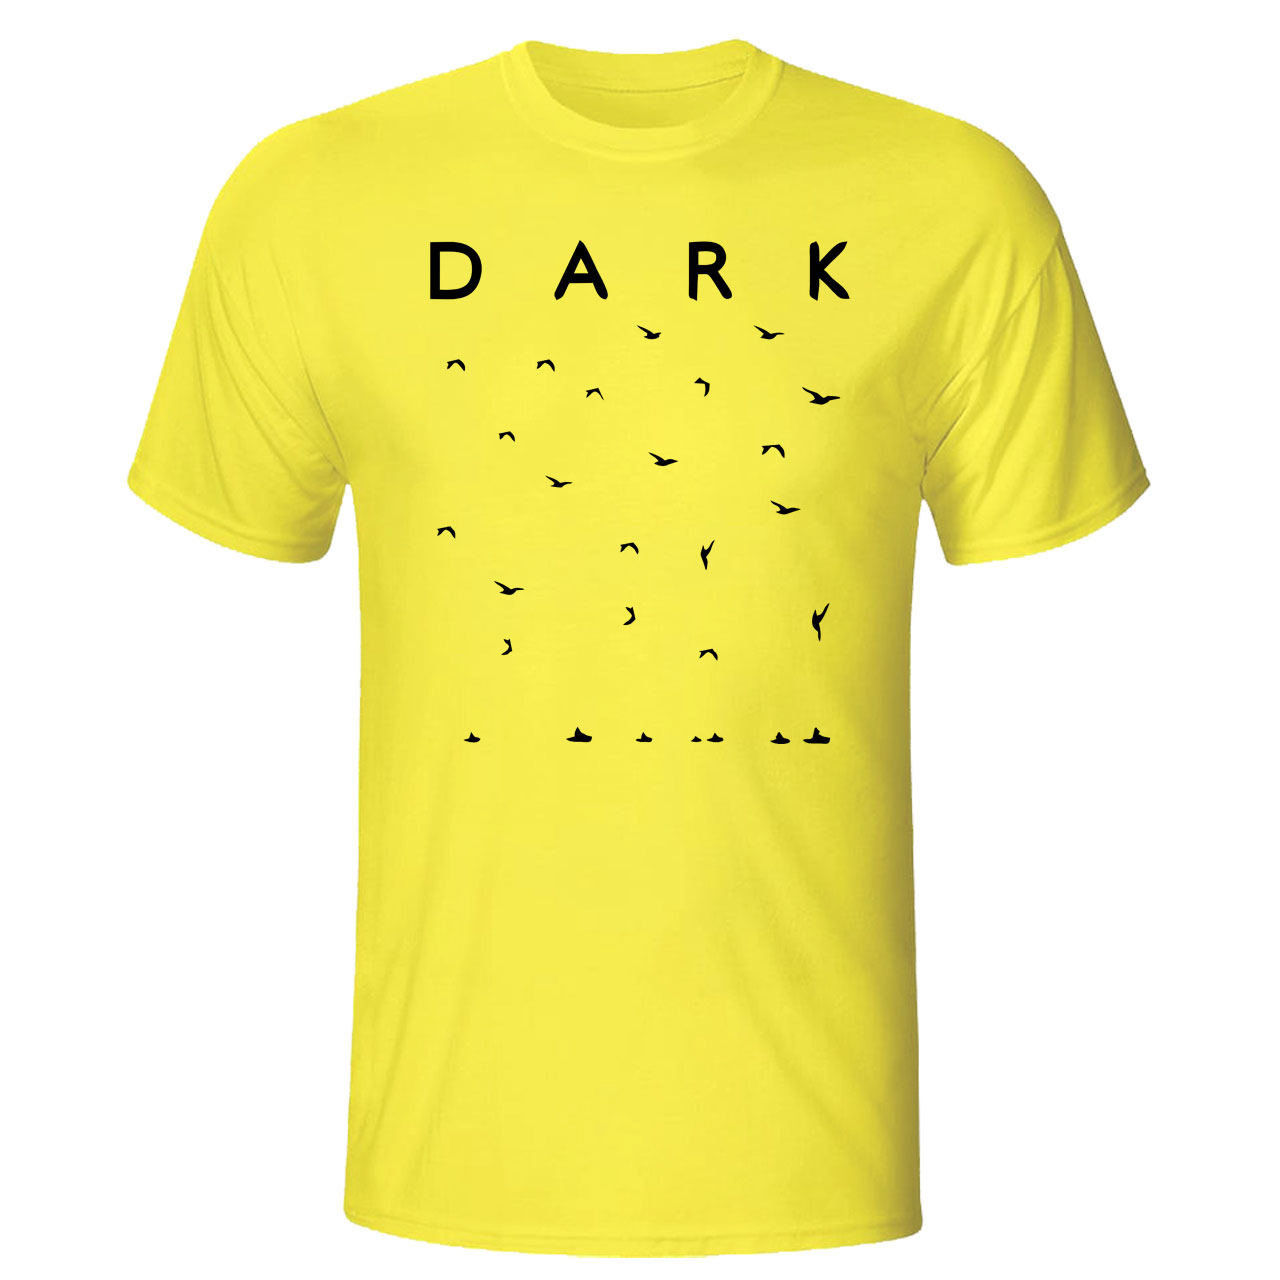 تیشرت مردانه  طرح DARK کد 43205  رنگ زرد